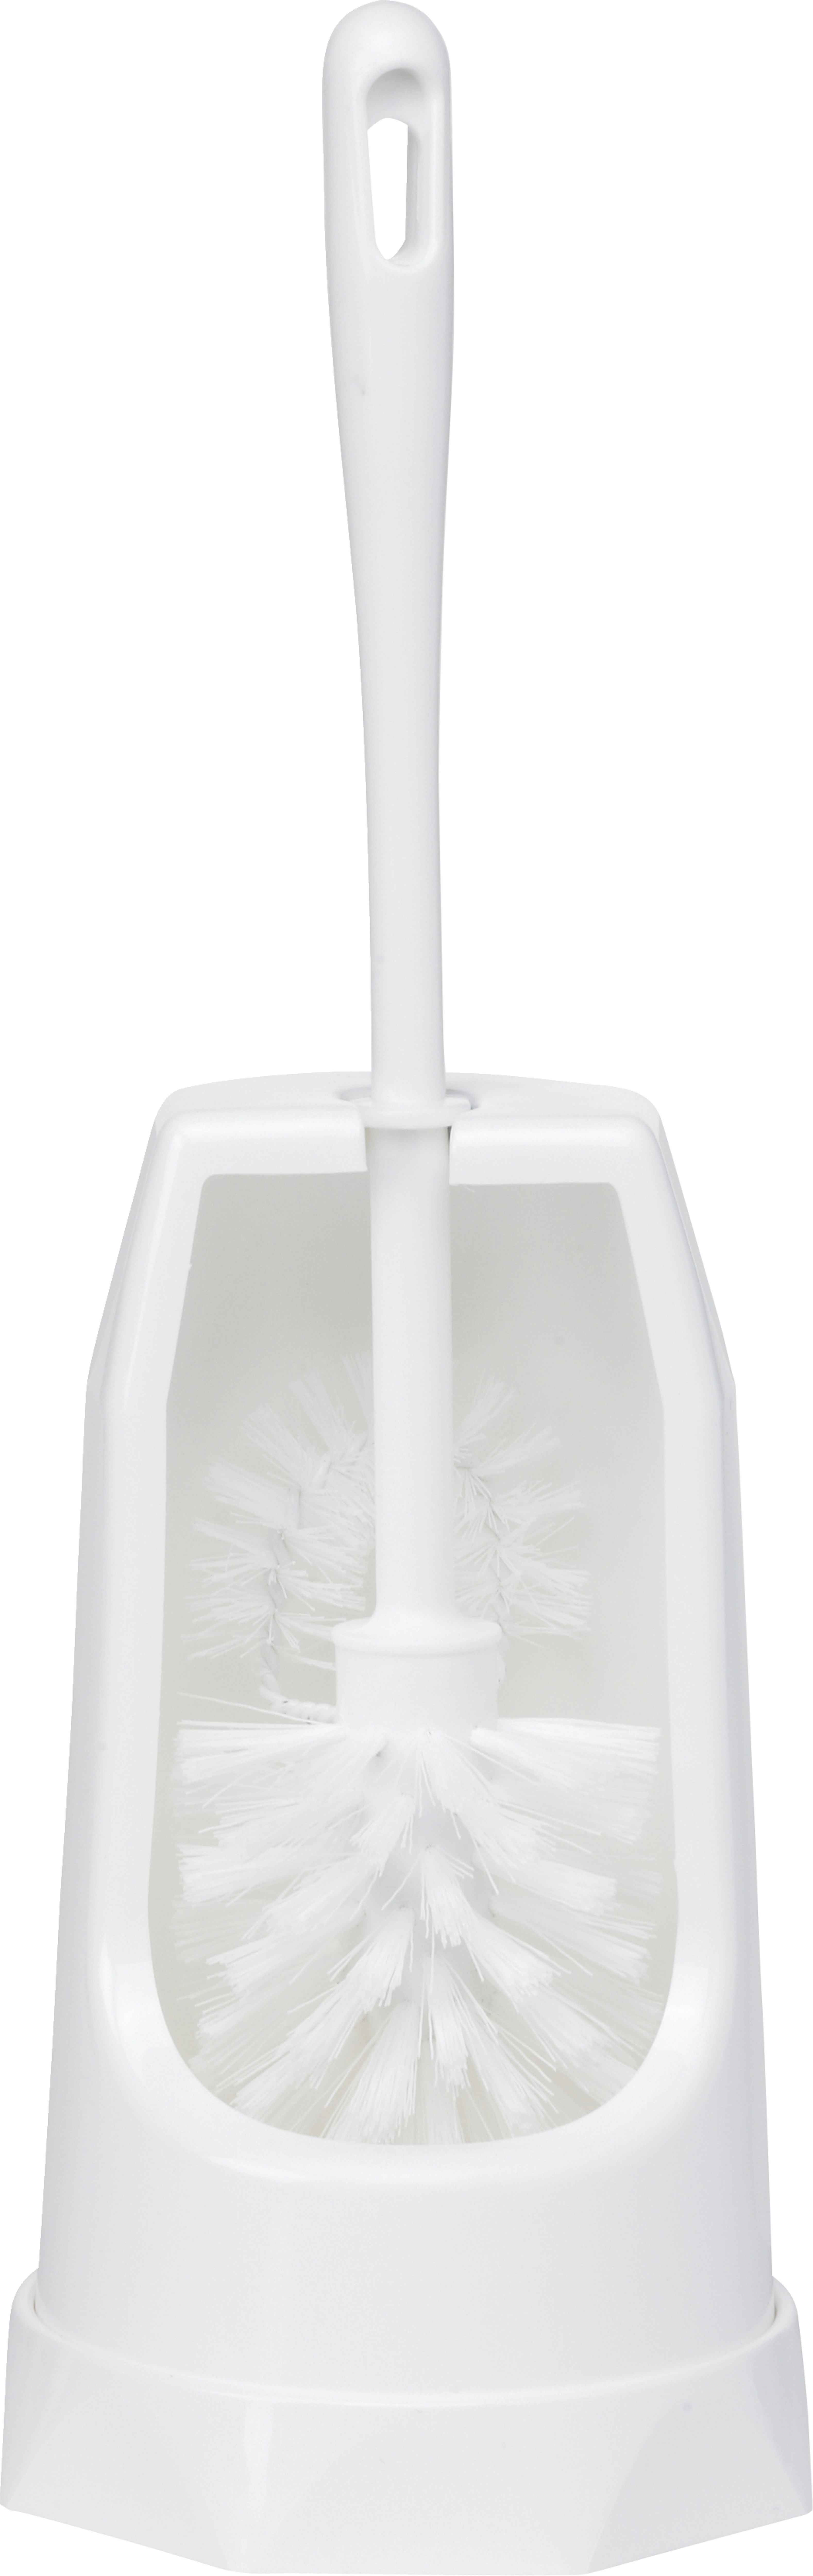 Vikan Toiletbørste m/skyllekantsbørste 400 mm Medium Hvid Hvide børster (5055)